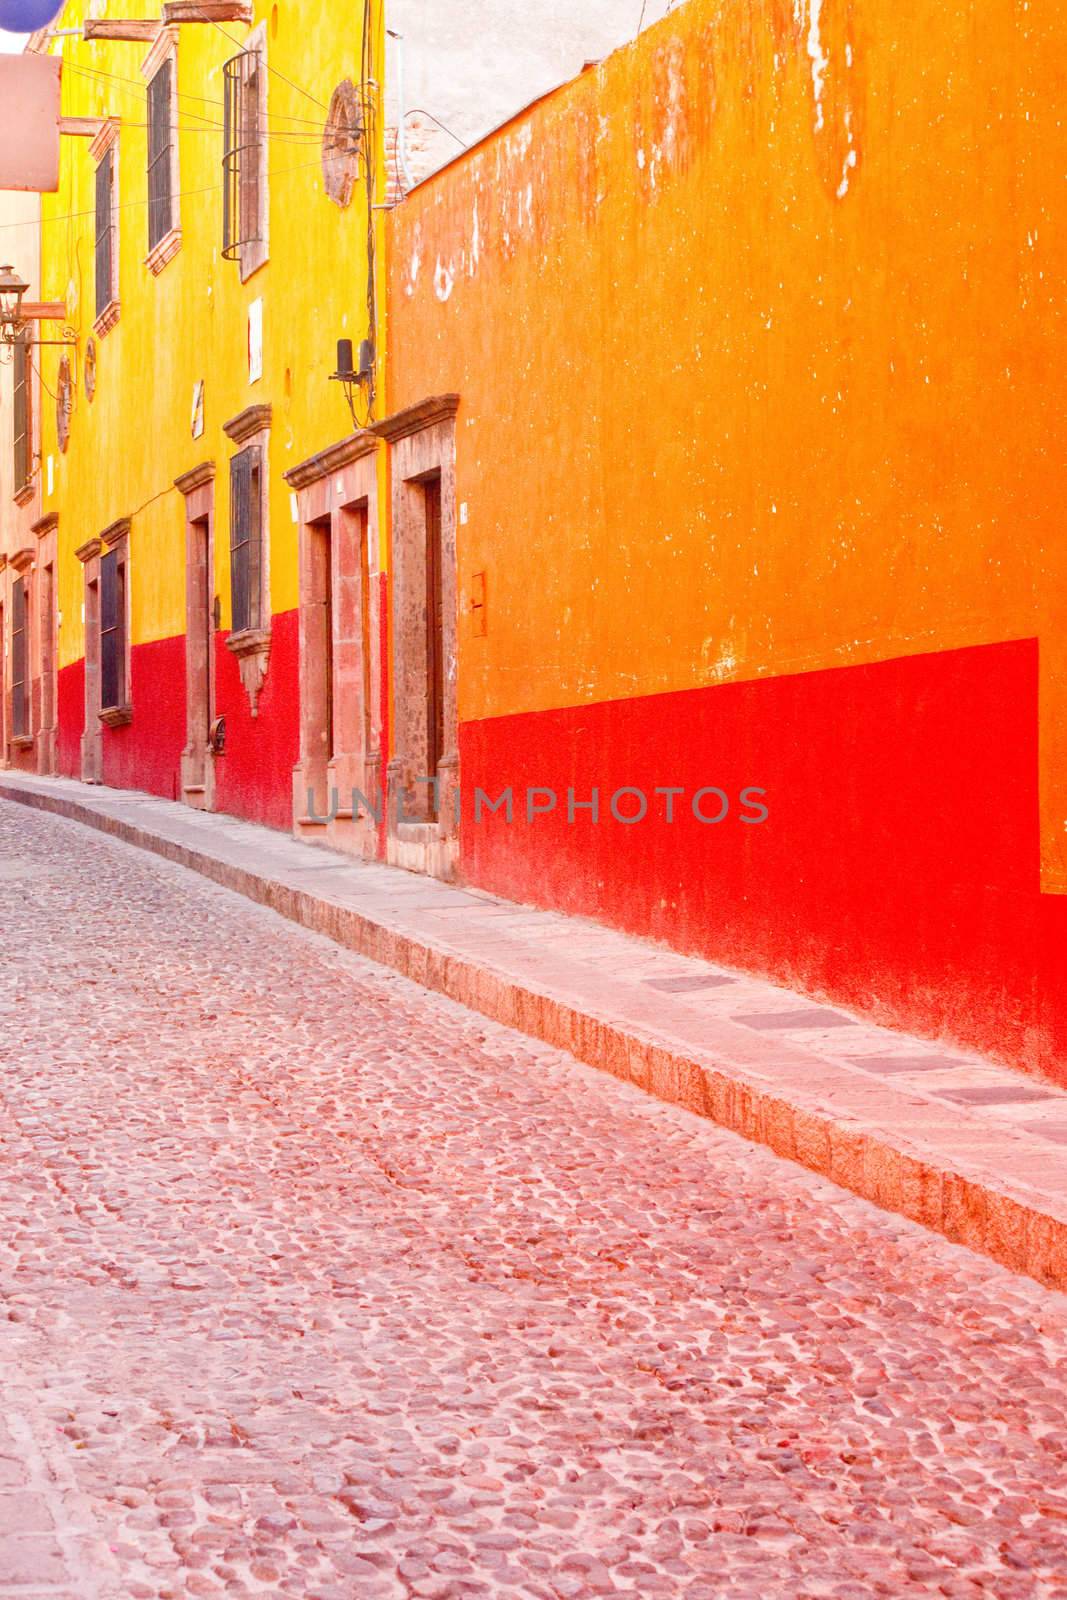 A colorful street scene in charming San Miguel de Allende, Mexico